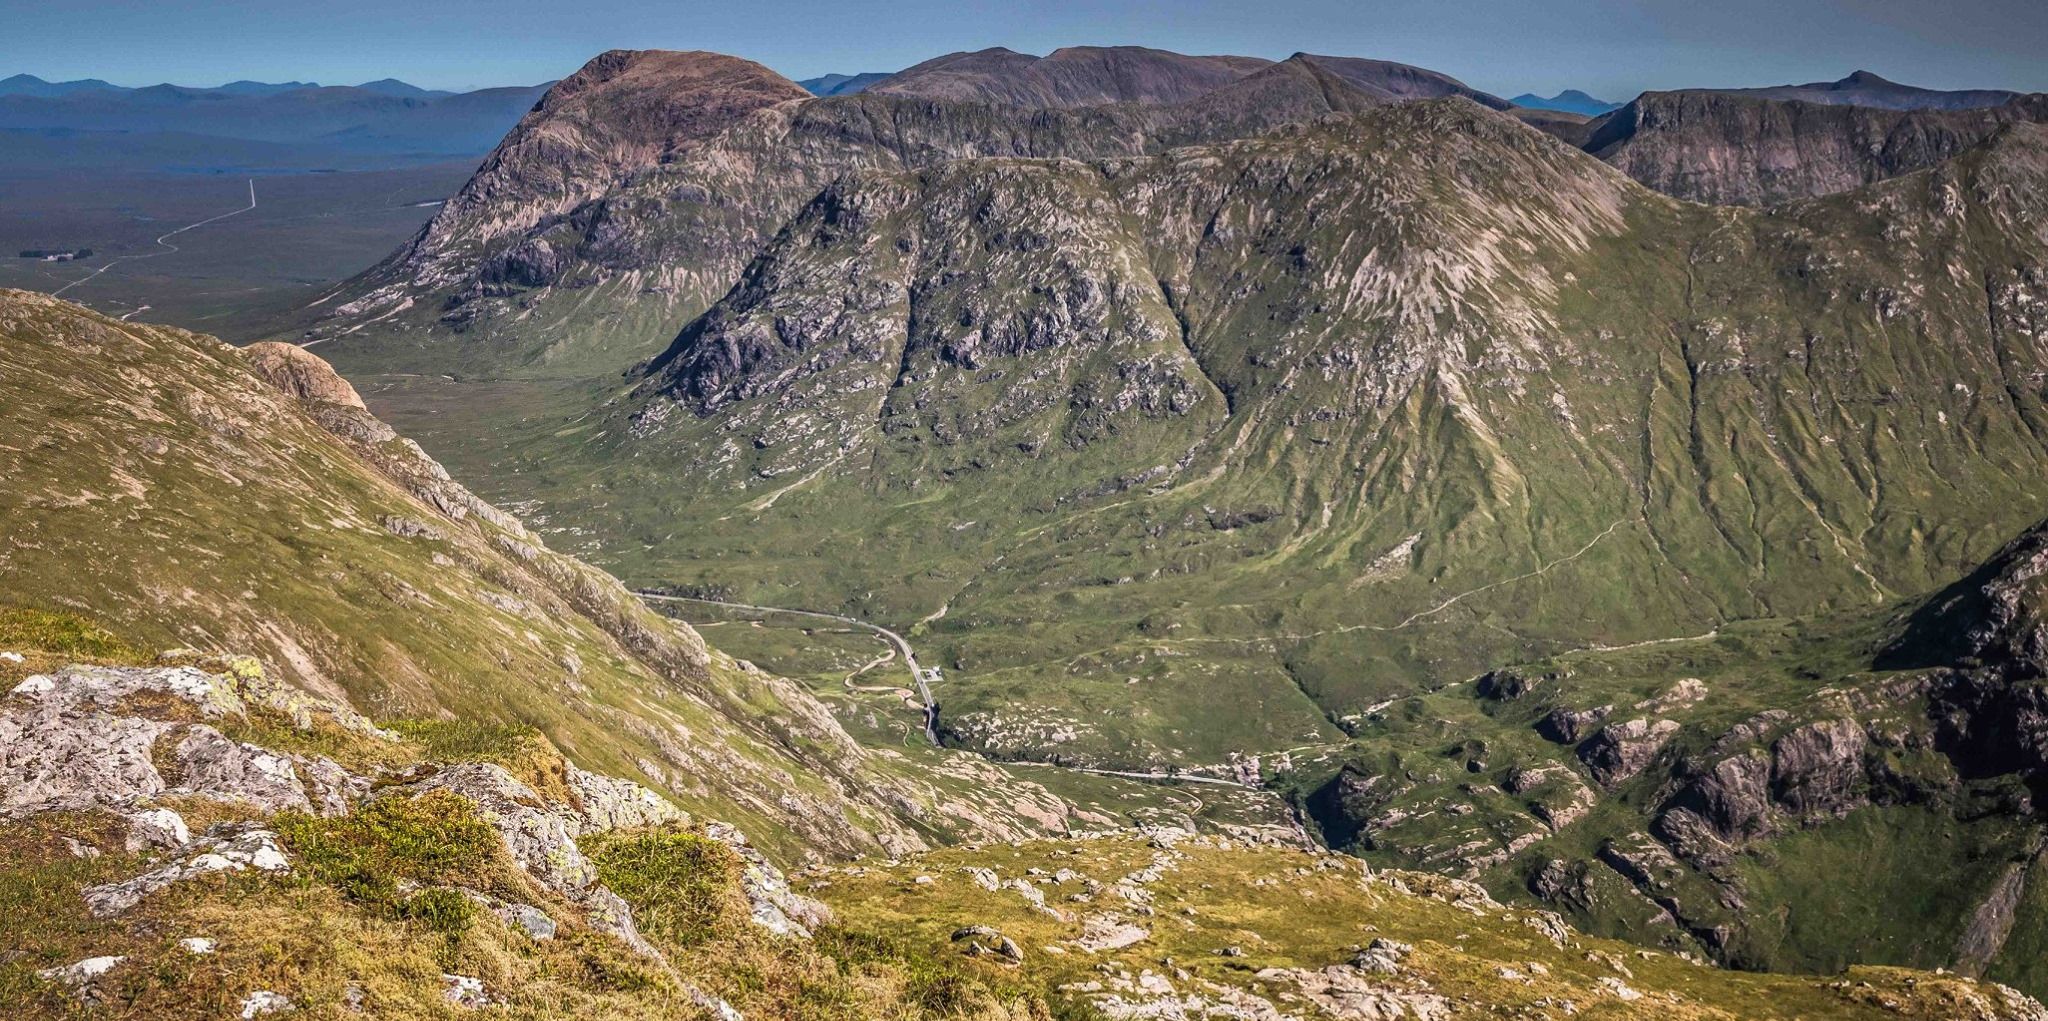 Buachaille Etive Mor and Buachaille Etive Beag from Aonach Eagach Ridge in Glencoe in the Highlands of Scotland